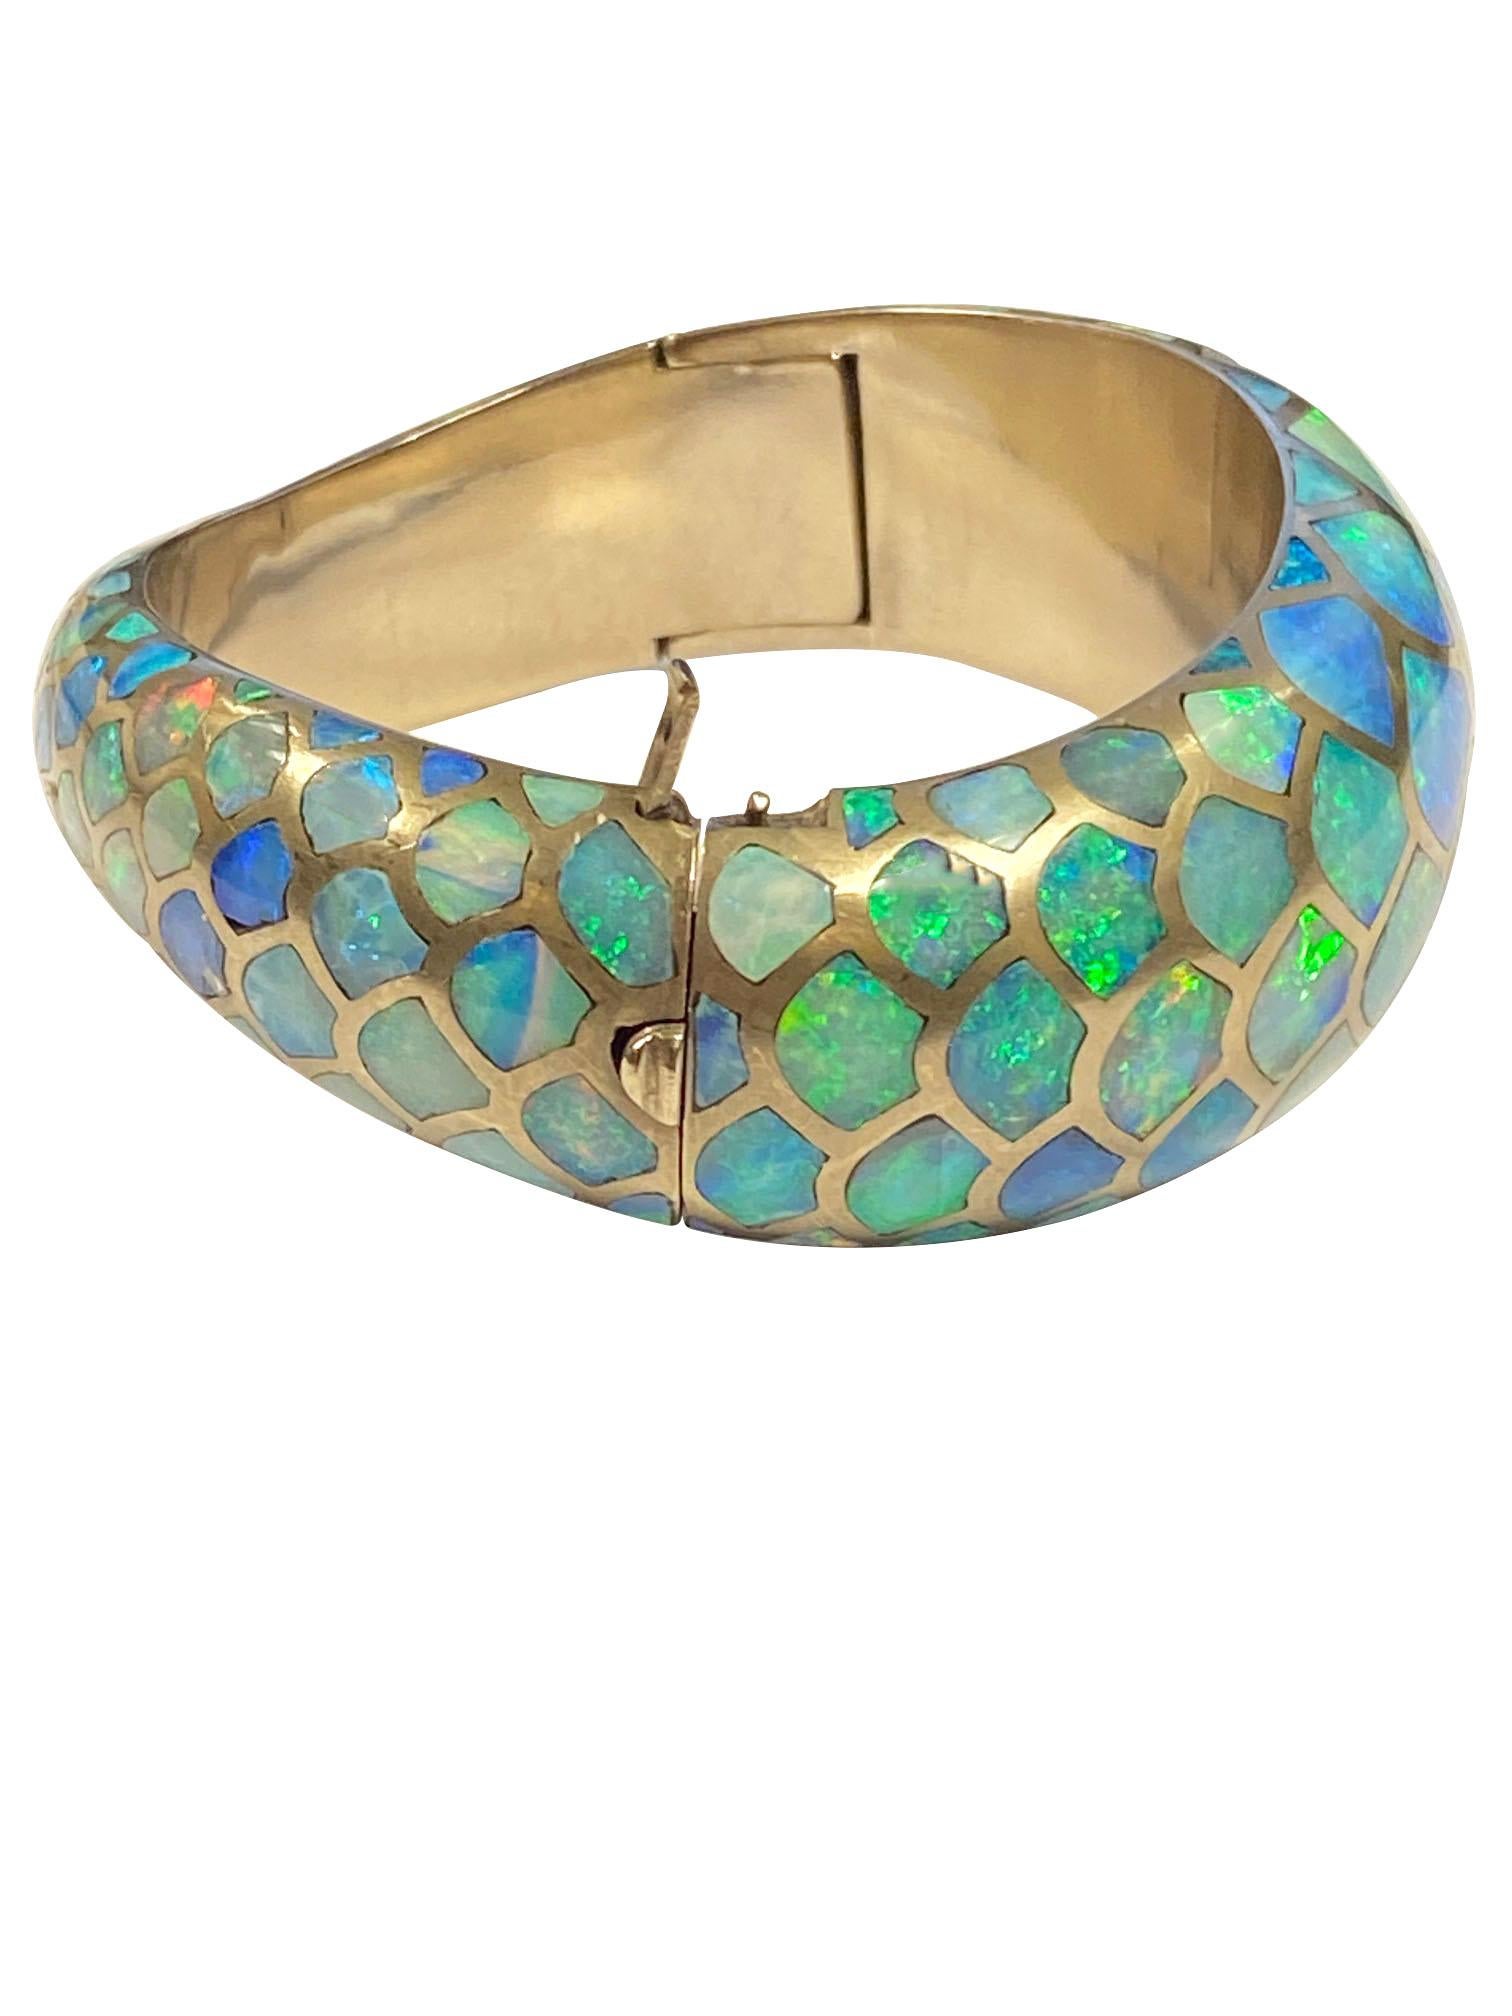 Angela Cummings White Gold and Opal Snakeskin Bangle Bracelet For Sale 1